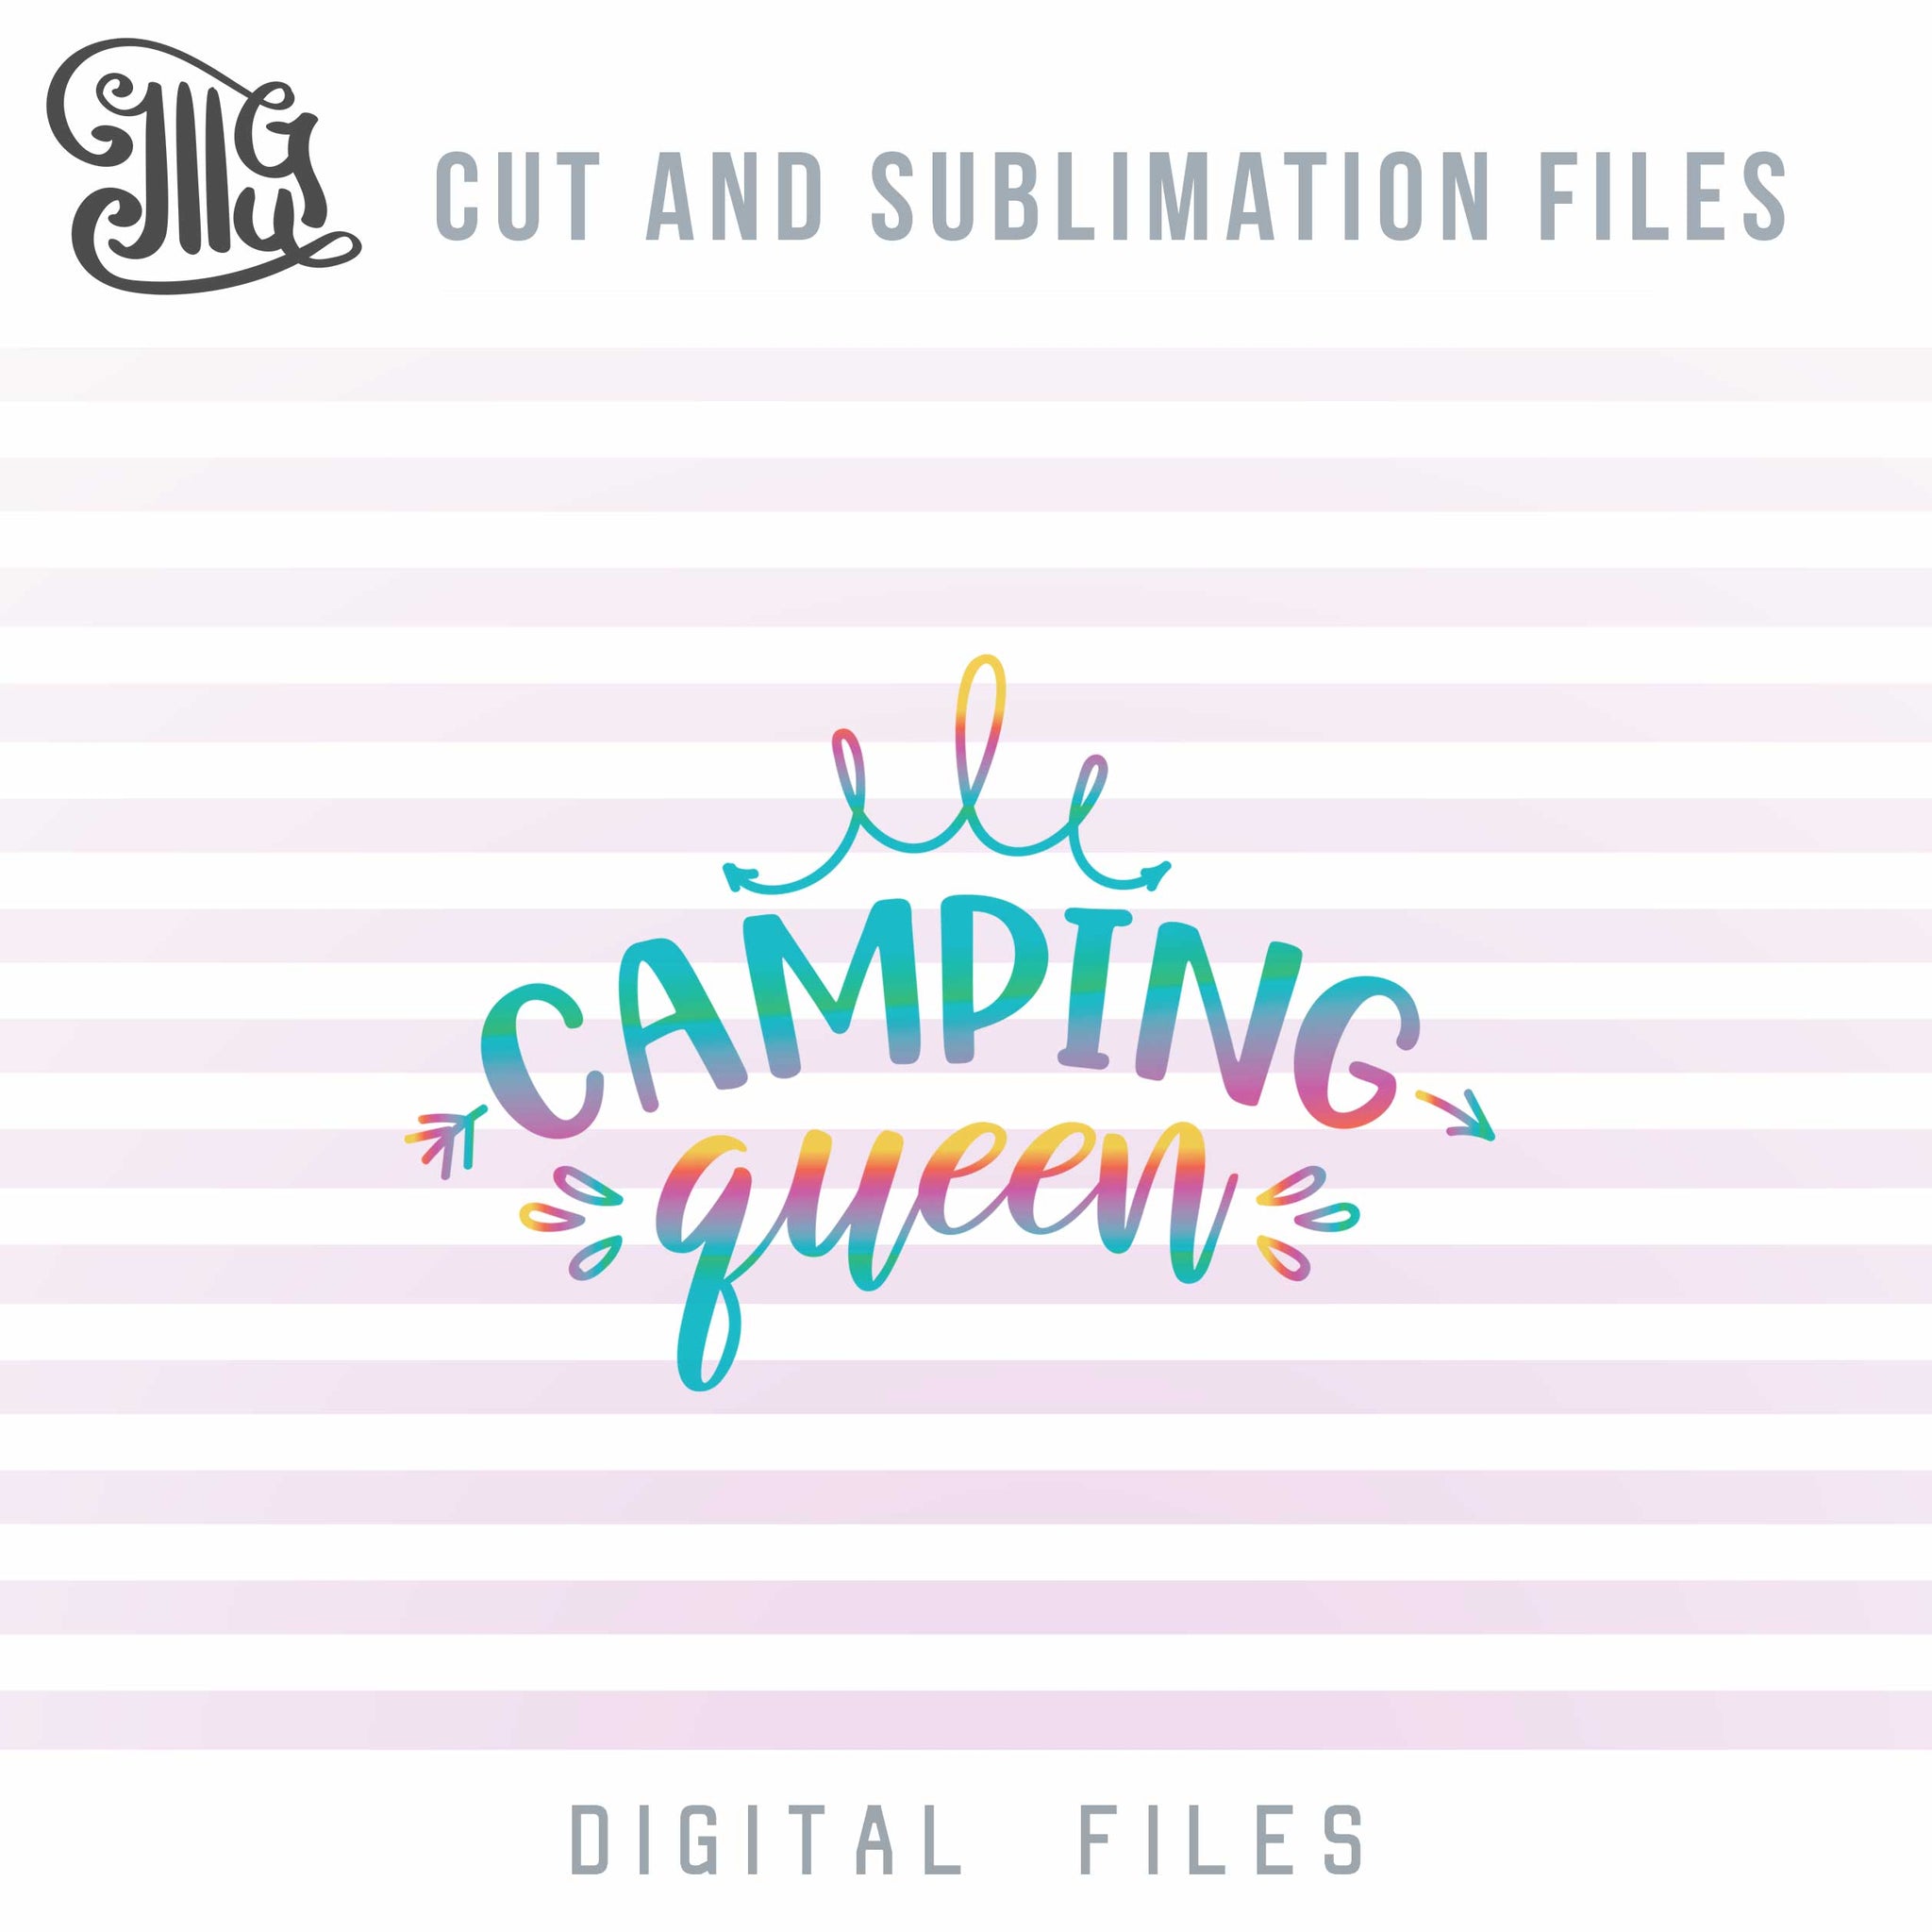 Camping Svg Campsite Svg Camping Sayings Camping Quotes Svg Campin Illustrator Guru